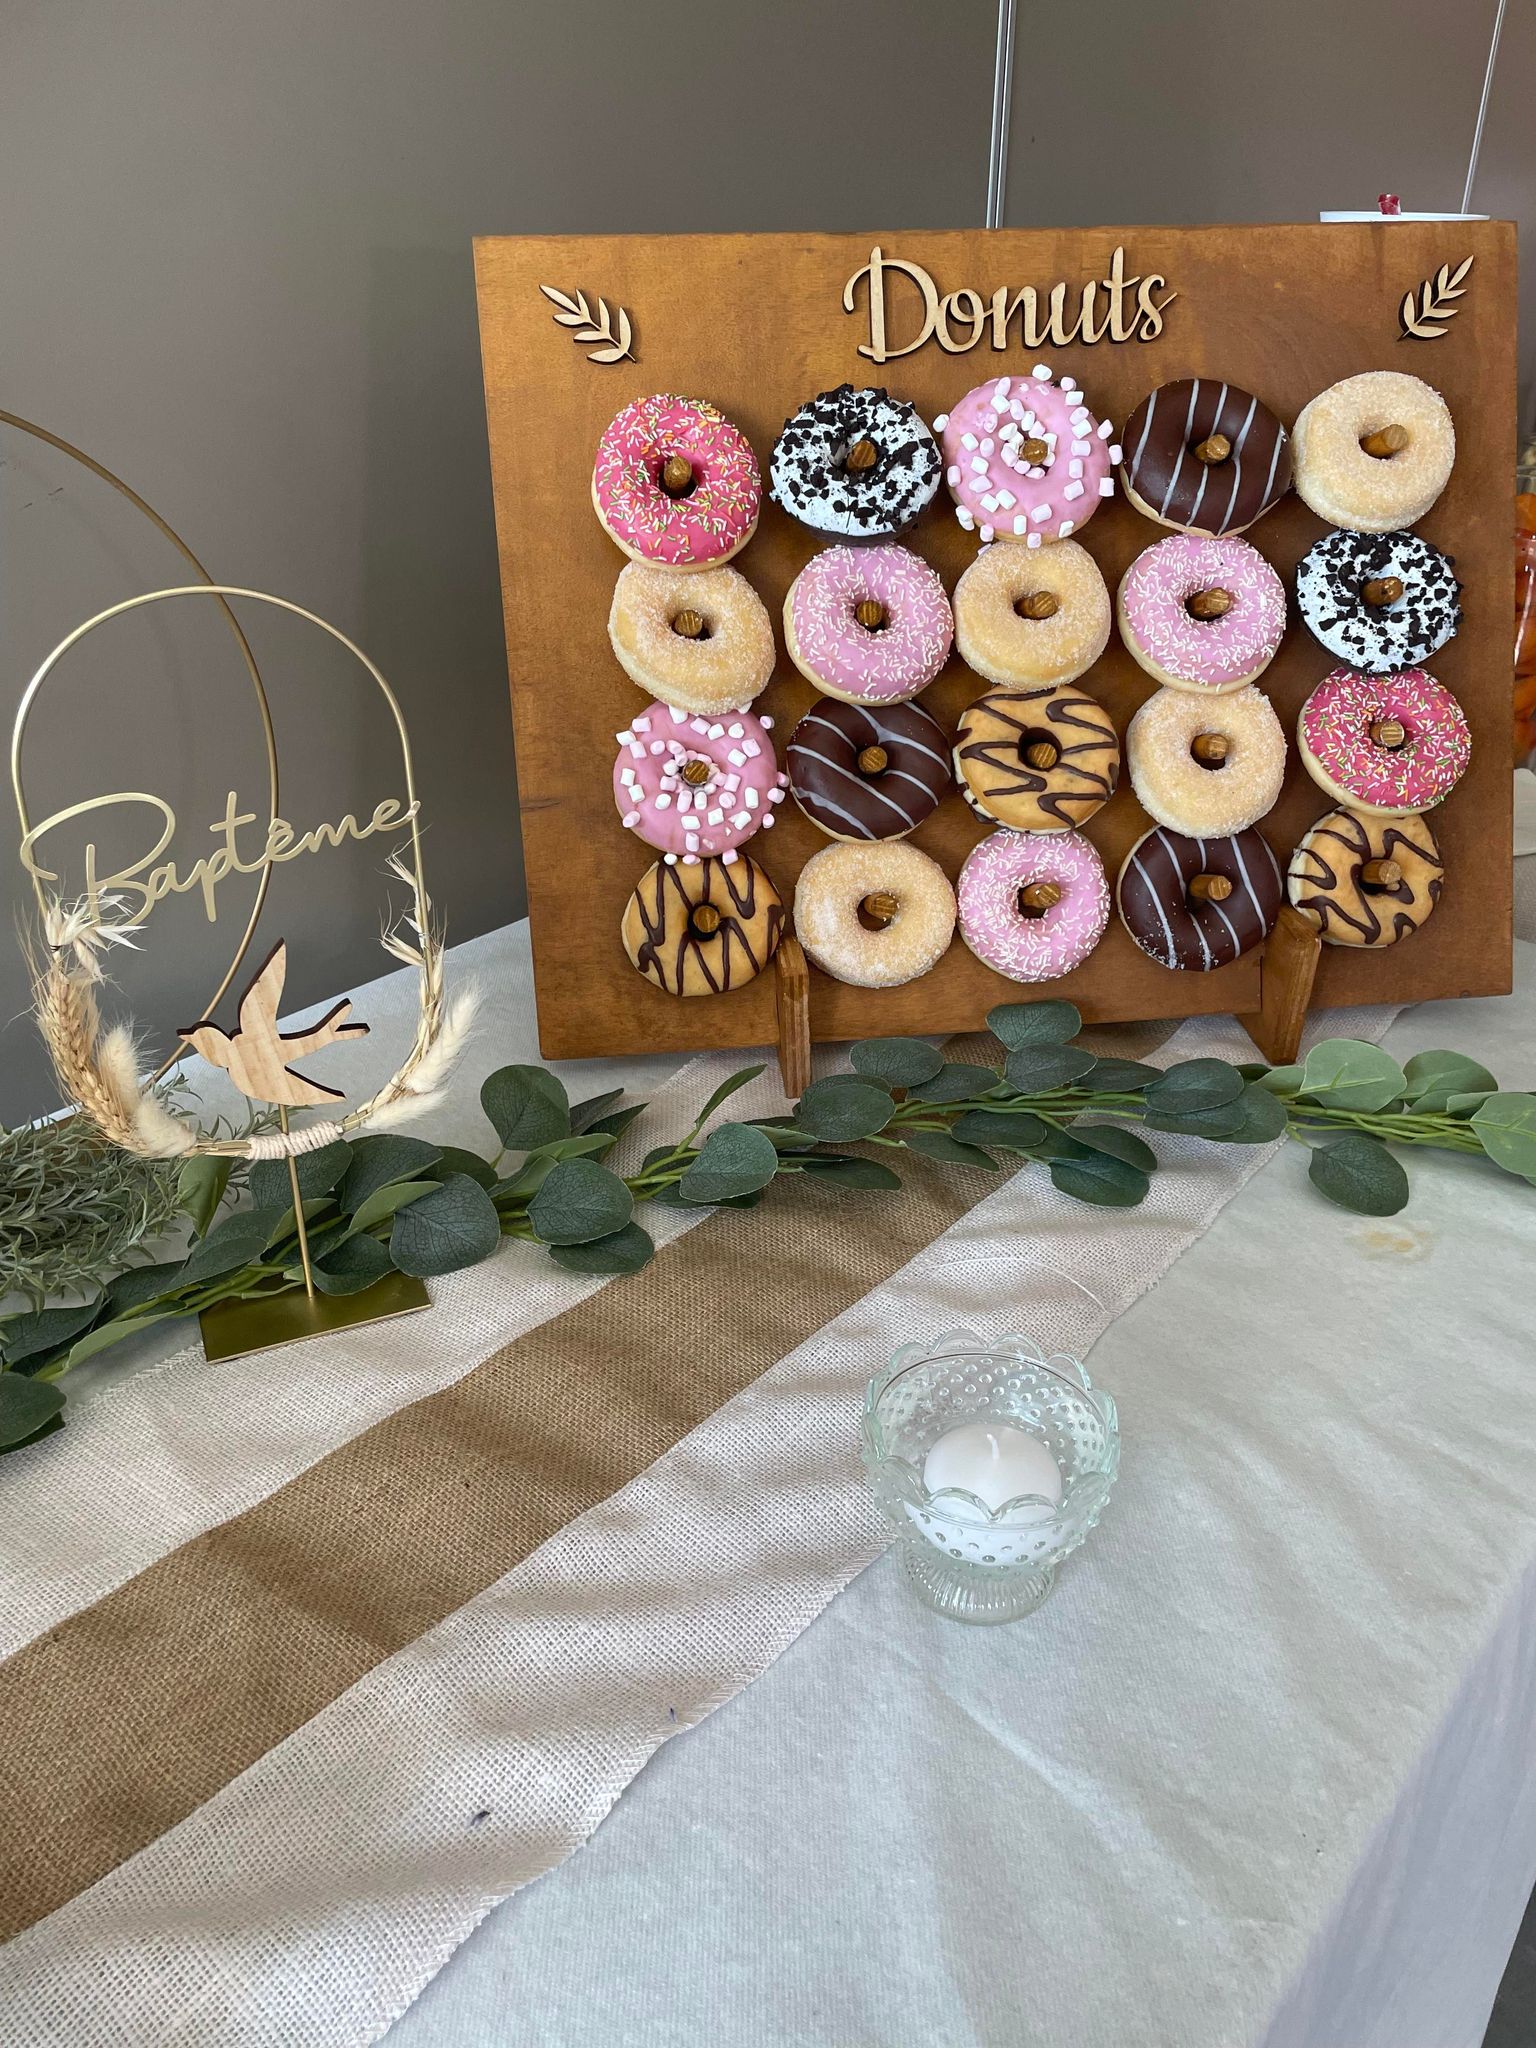 La_Festibox_donuts